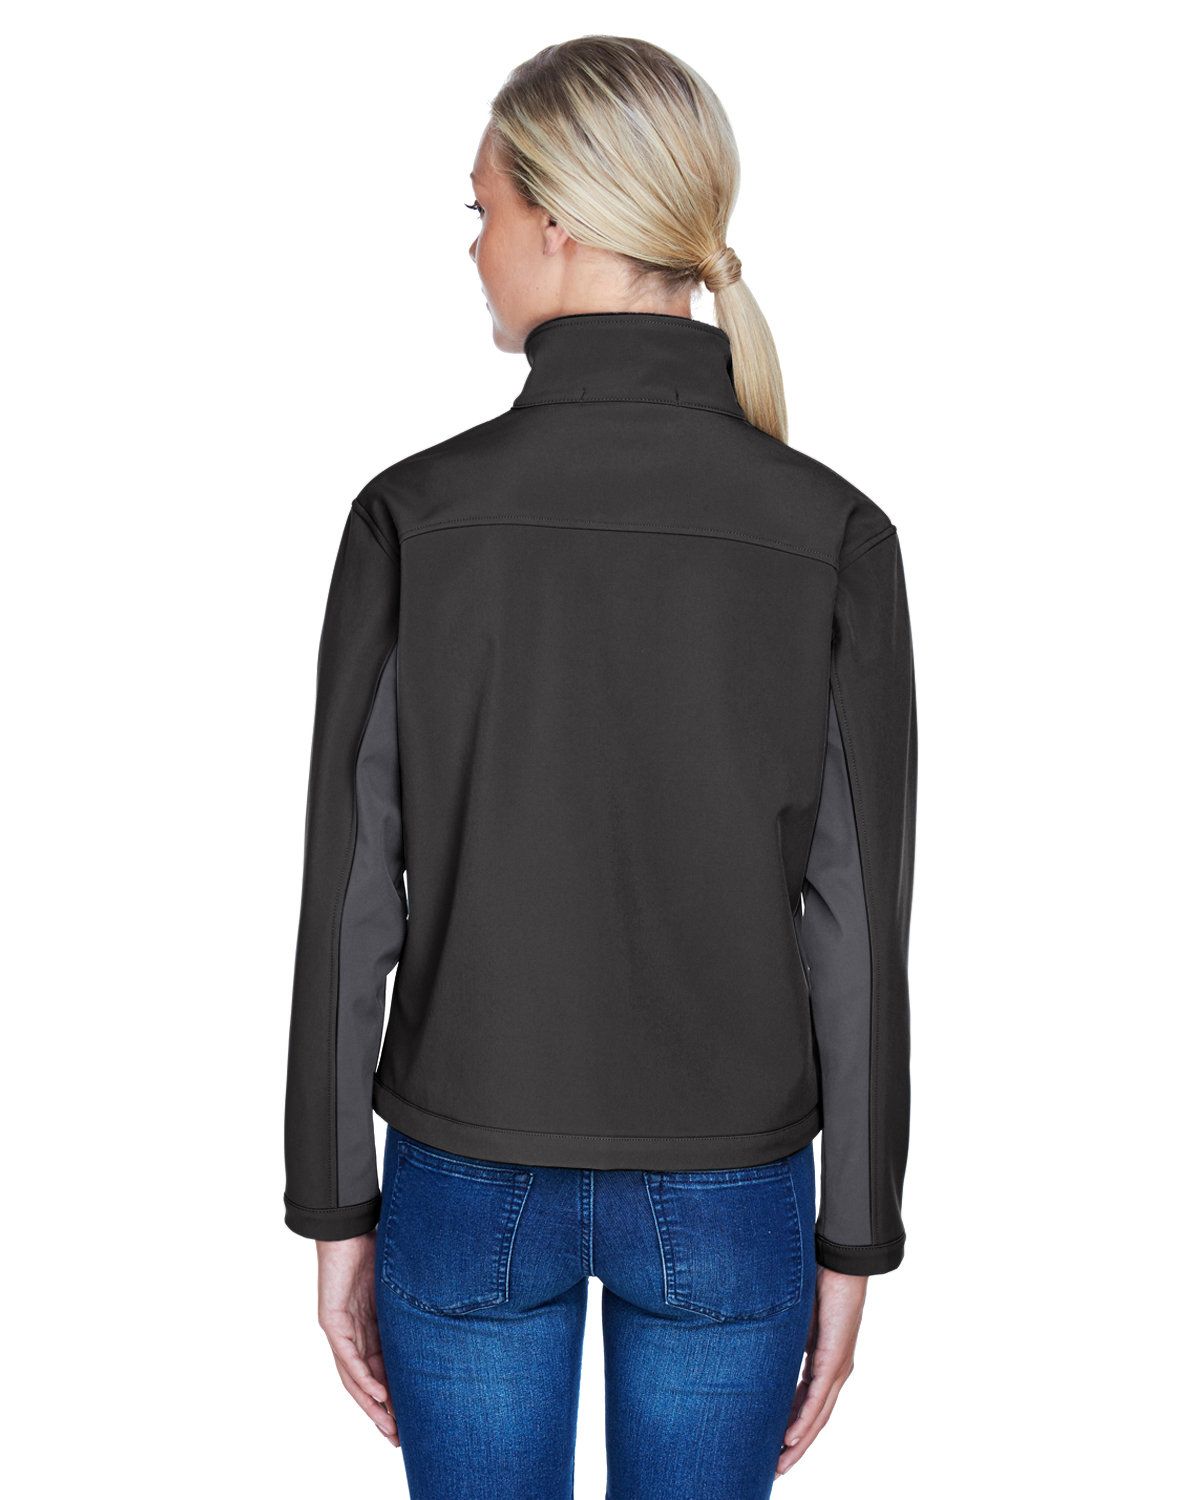 'Devon & Jones D997W Ladies Soft Shell Colorblock Jacket'